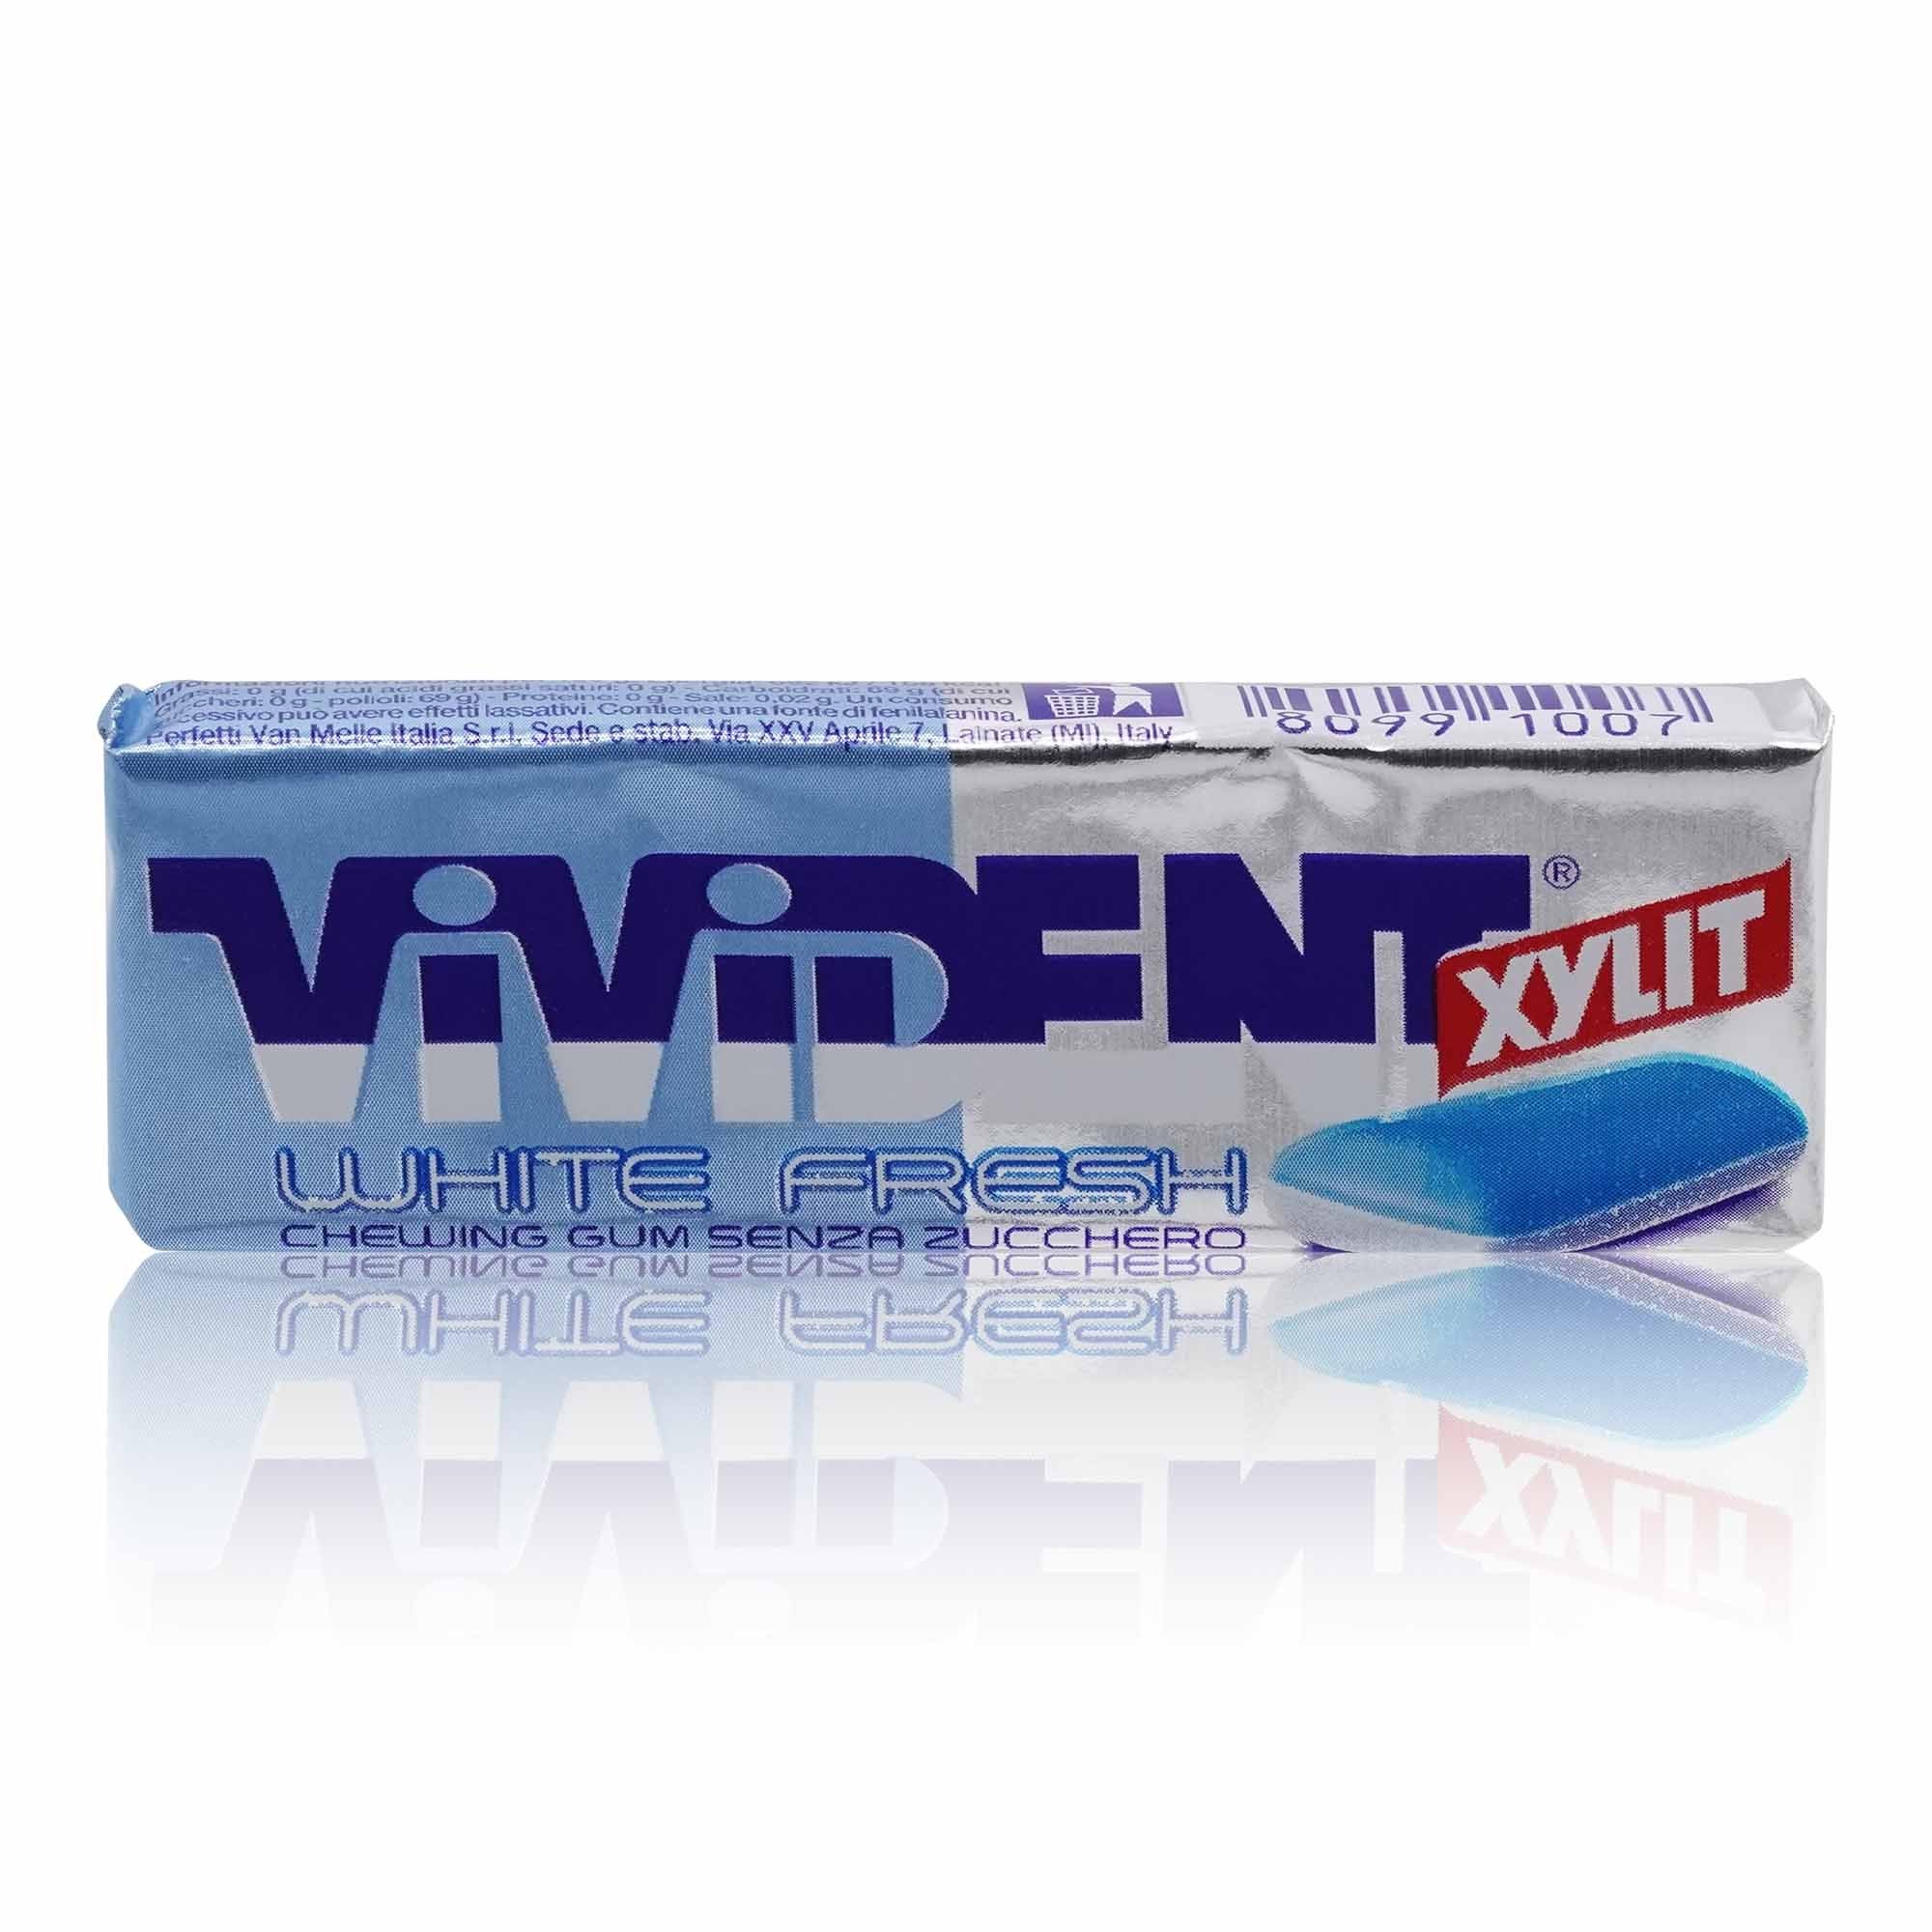 VIVIDENT Vivident Xylit white fresh – Vivident Xylit Kaugummi - 0,045kg - italienisch-einkaufen.de